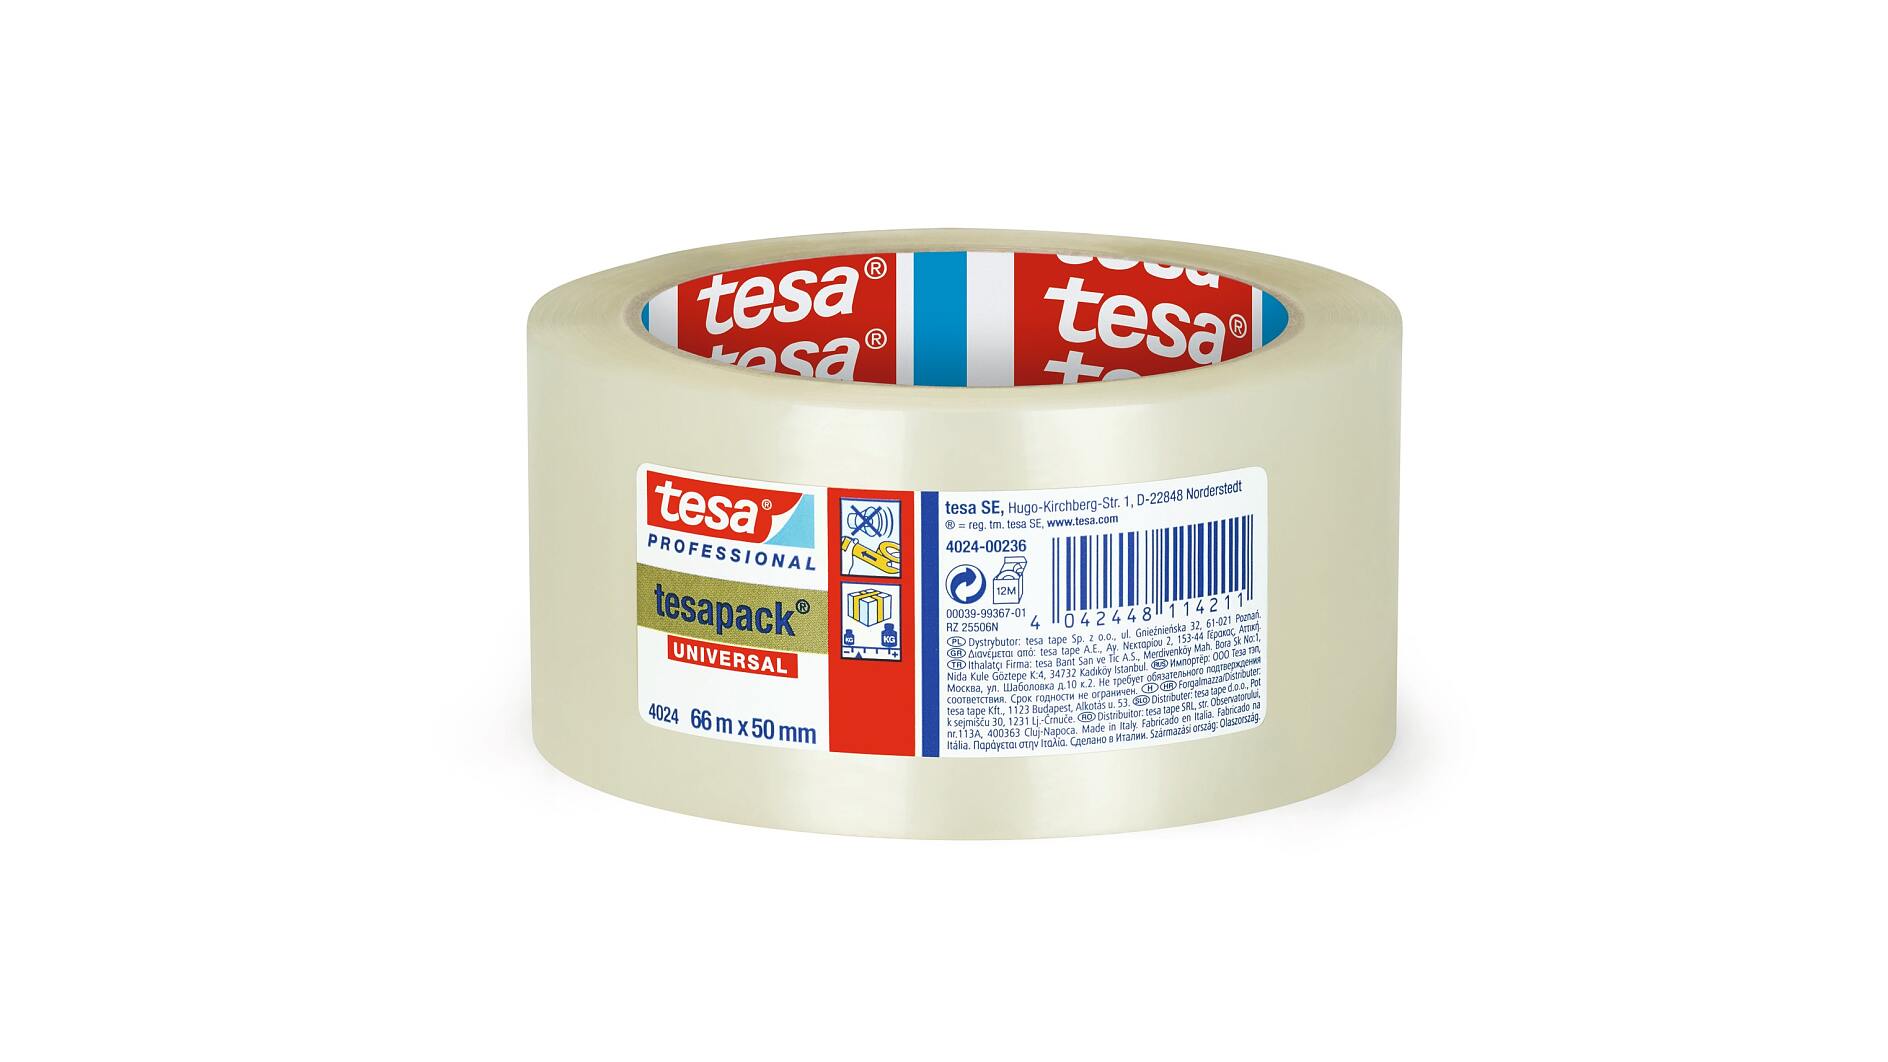 Packaging tape and carton sealing tape by tesa®